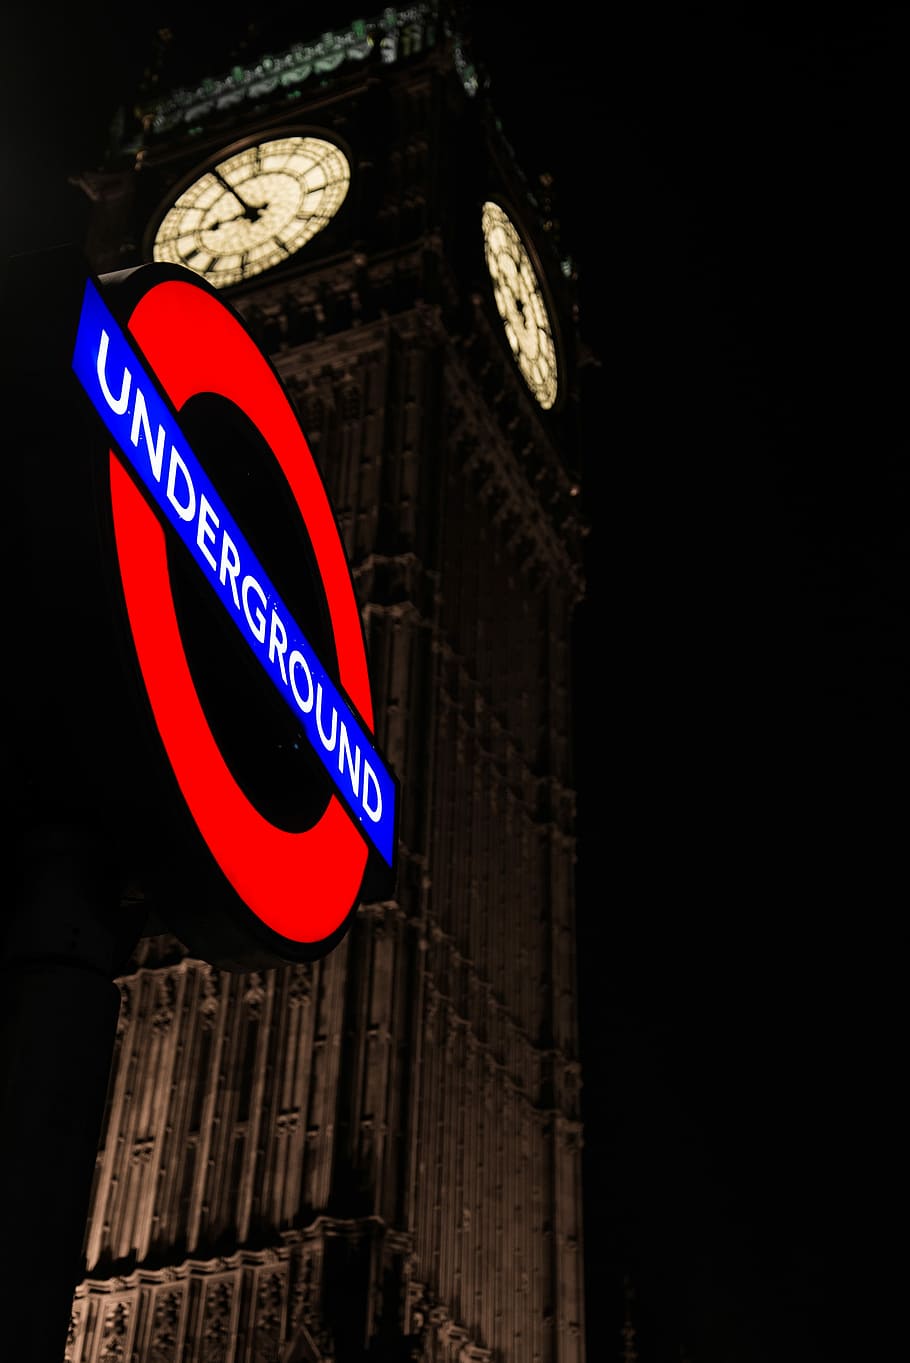 Subterrâneo, Big Ben, Metrô, Londres, britânico, inglês, turista, torre, viagem, marco